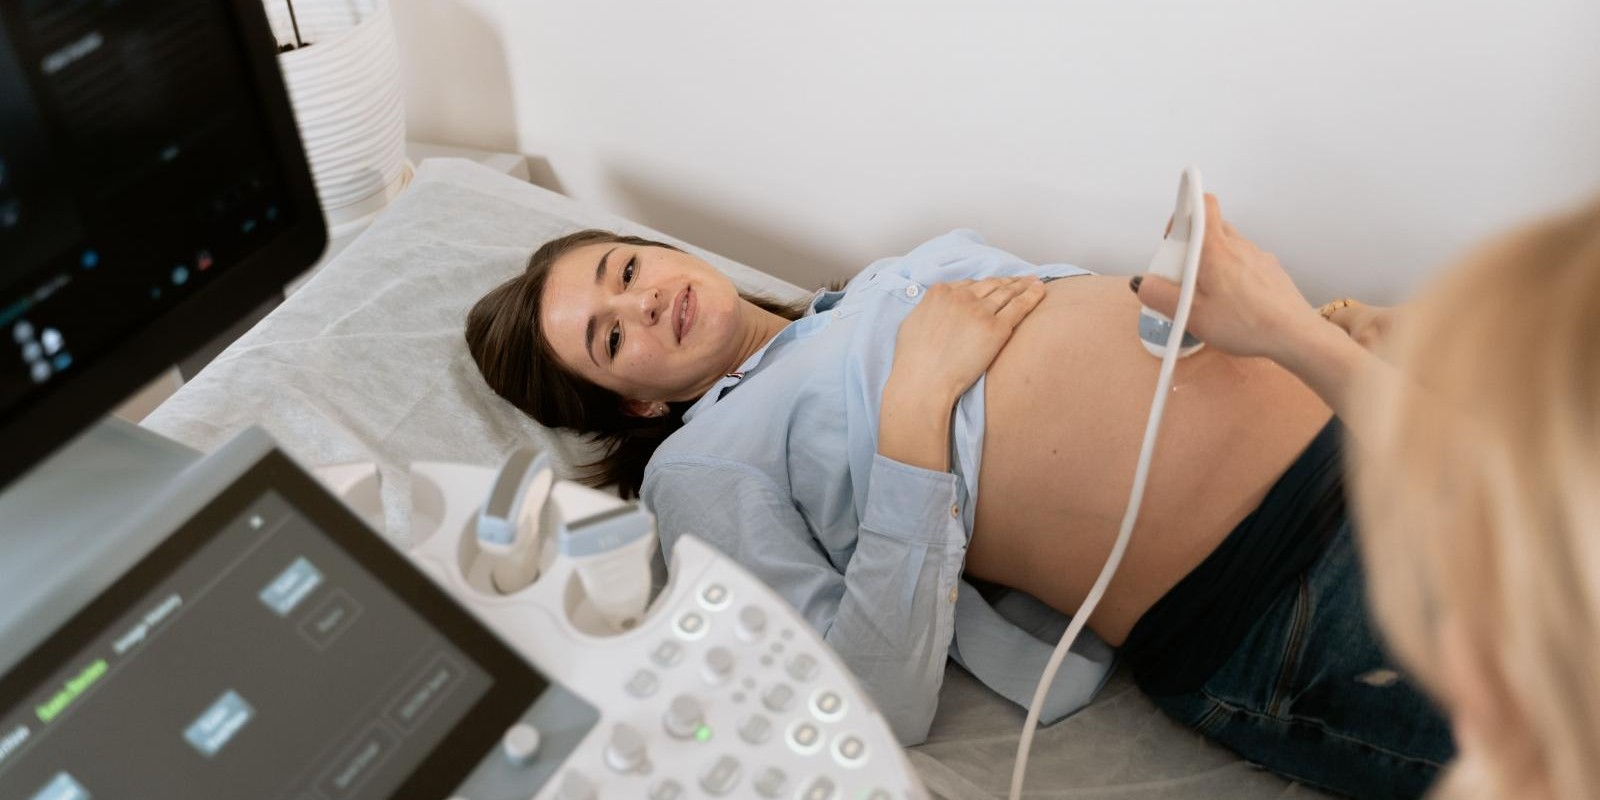 Quais os principais tipos de ultrassons indicados na gravidez?